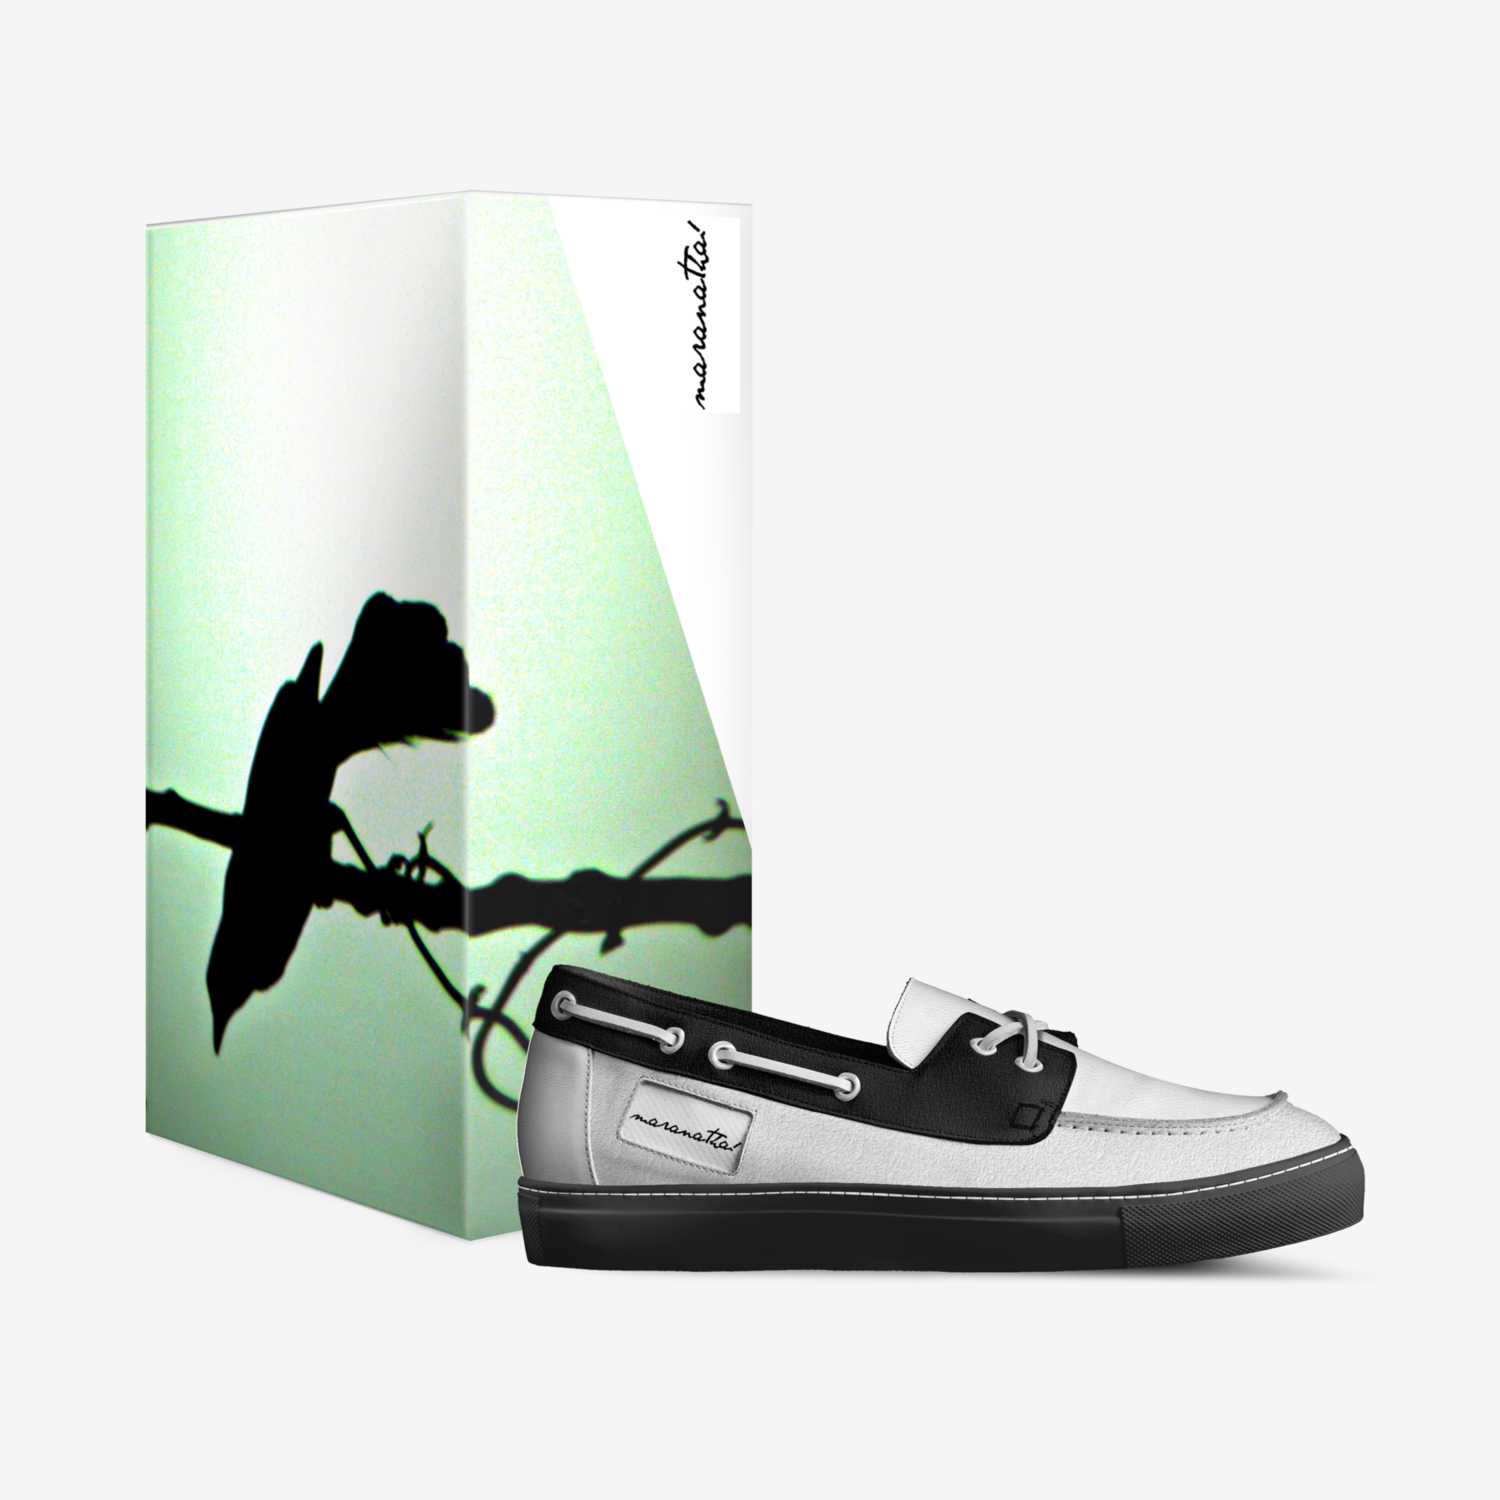 maranatha! custom made in Italy shoes by Genieve Dawkins | Box view